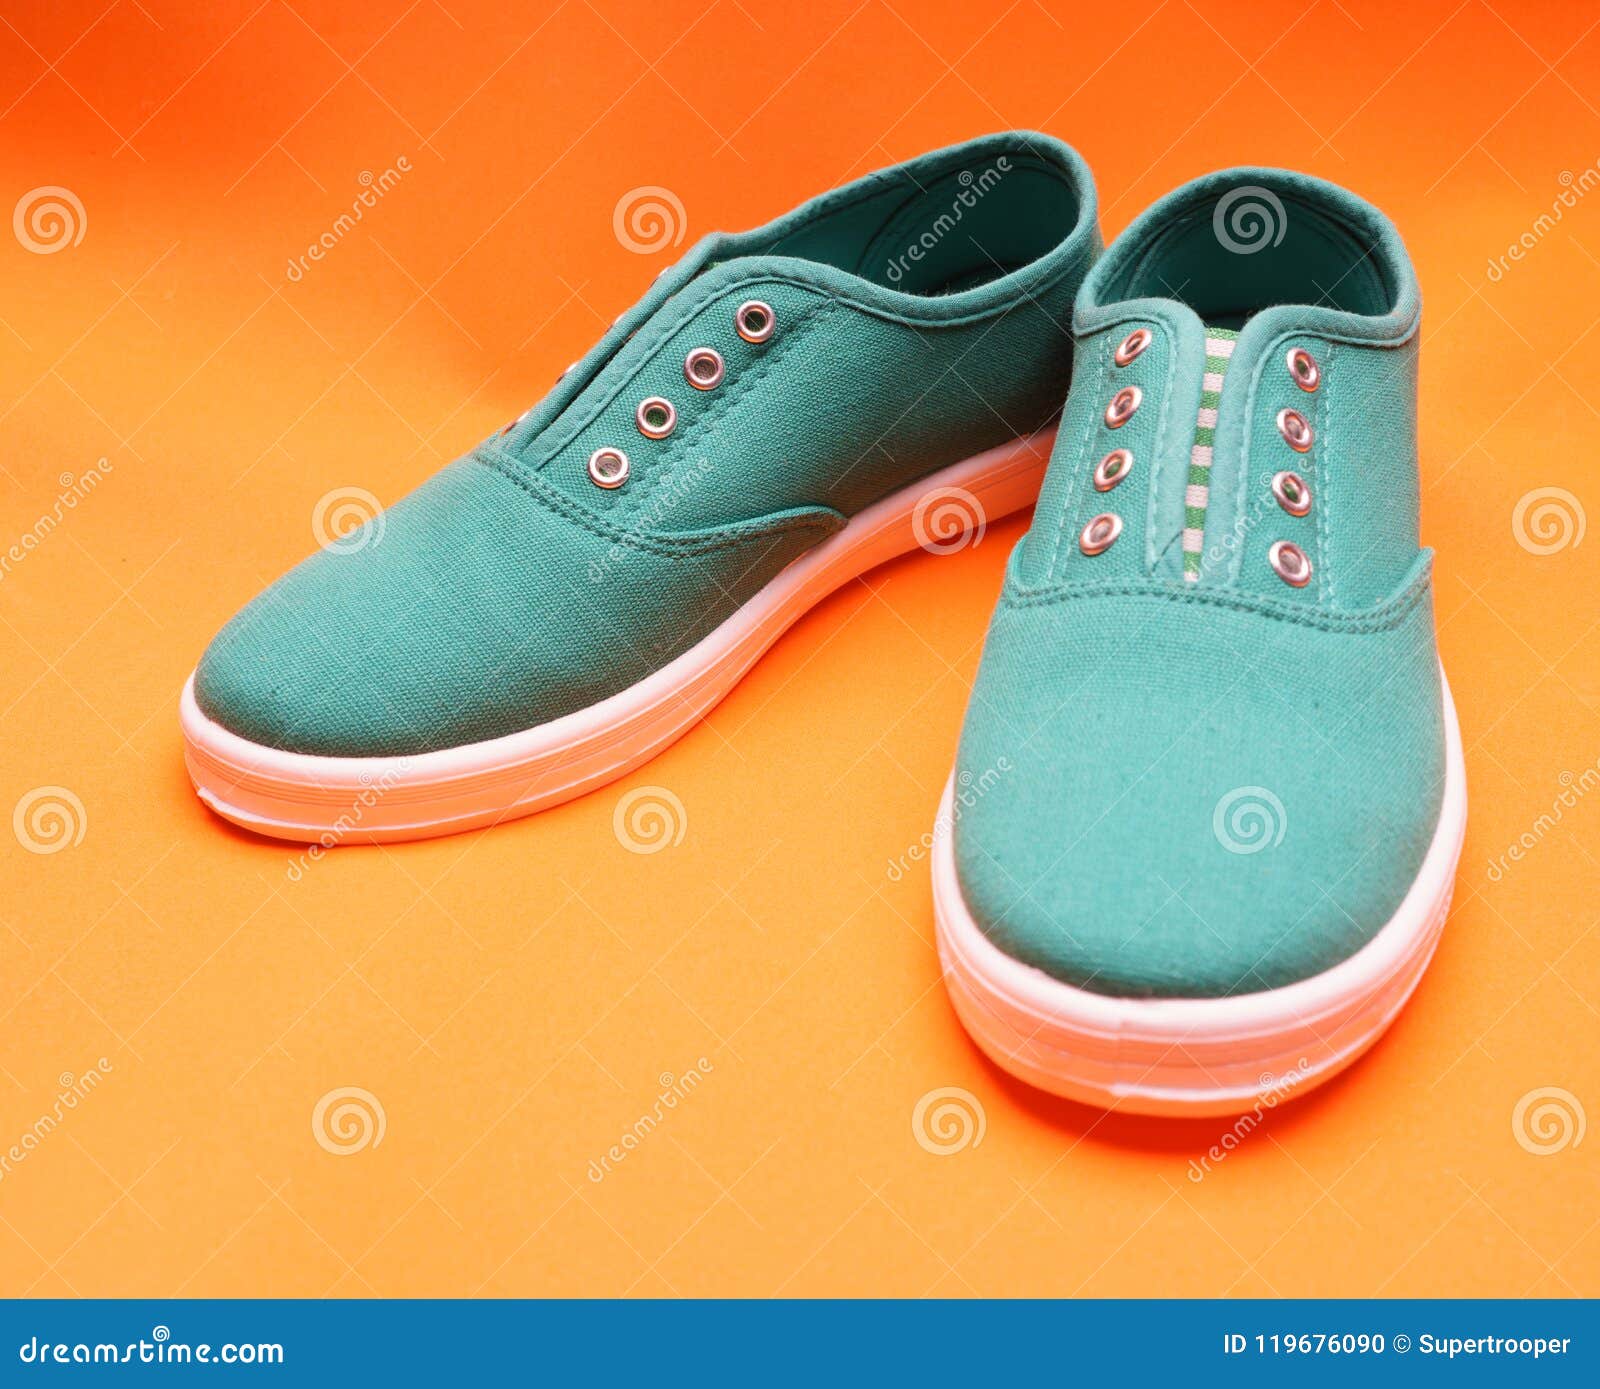 Green Sneakers on Orange stock photo. Image of football - 119676090